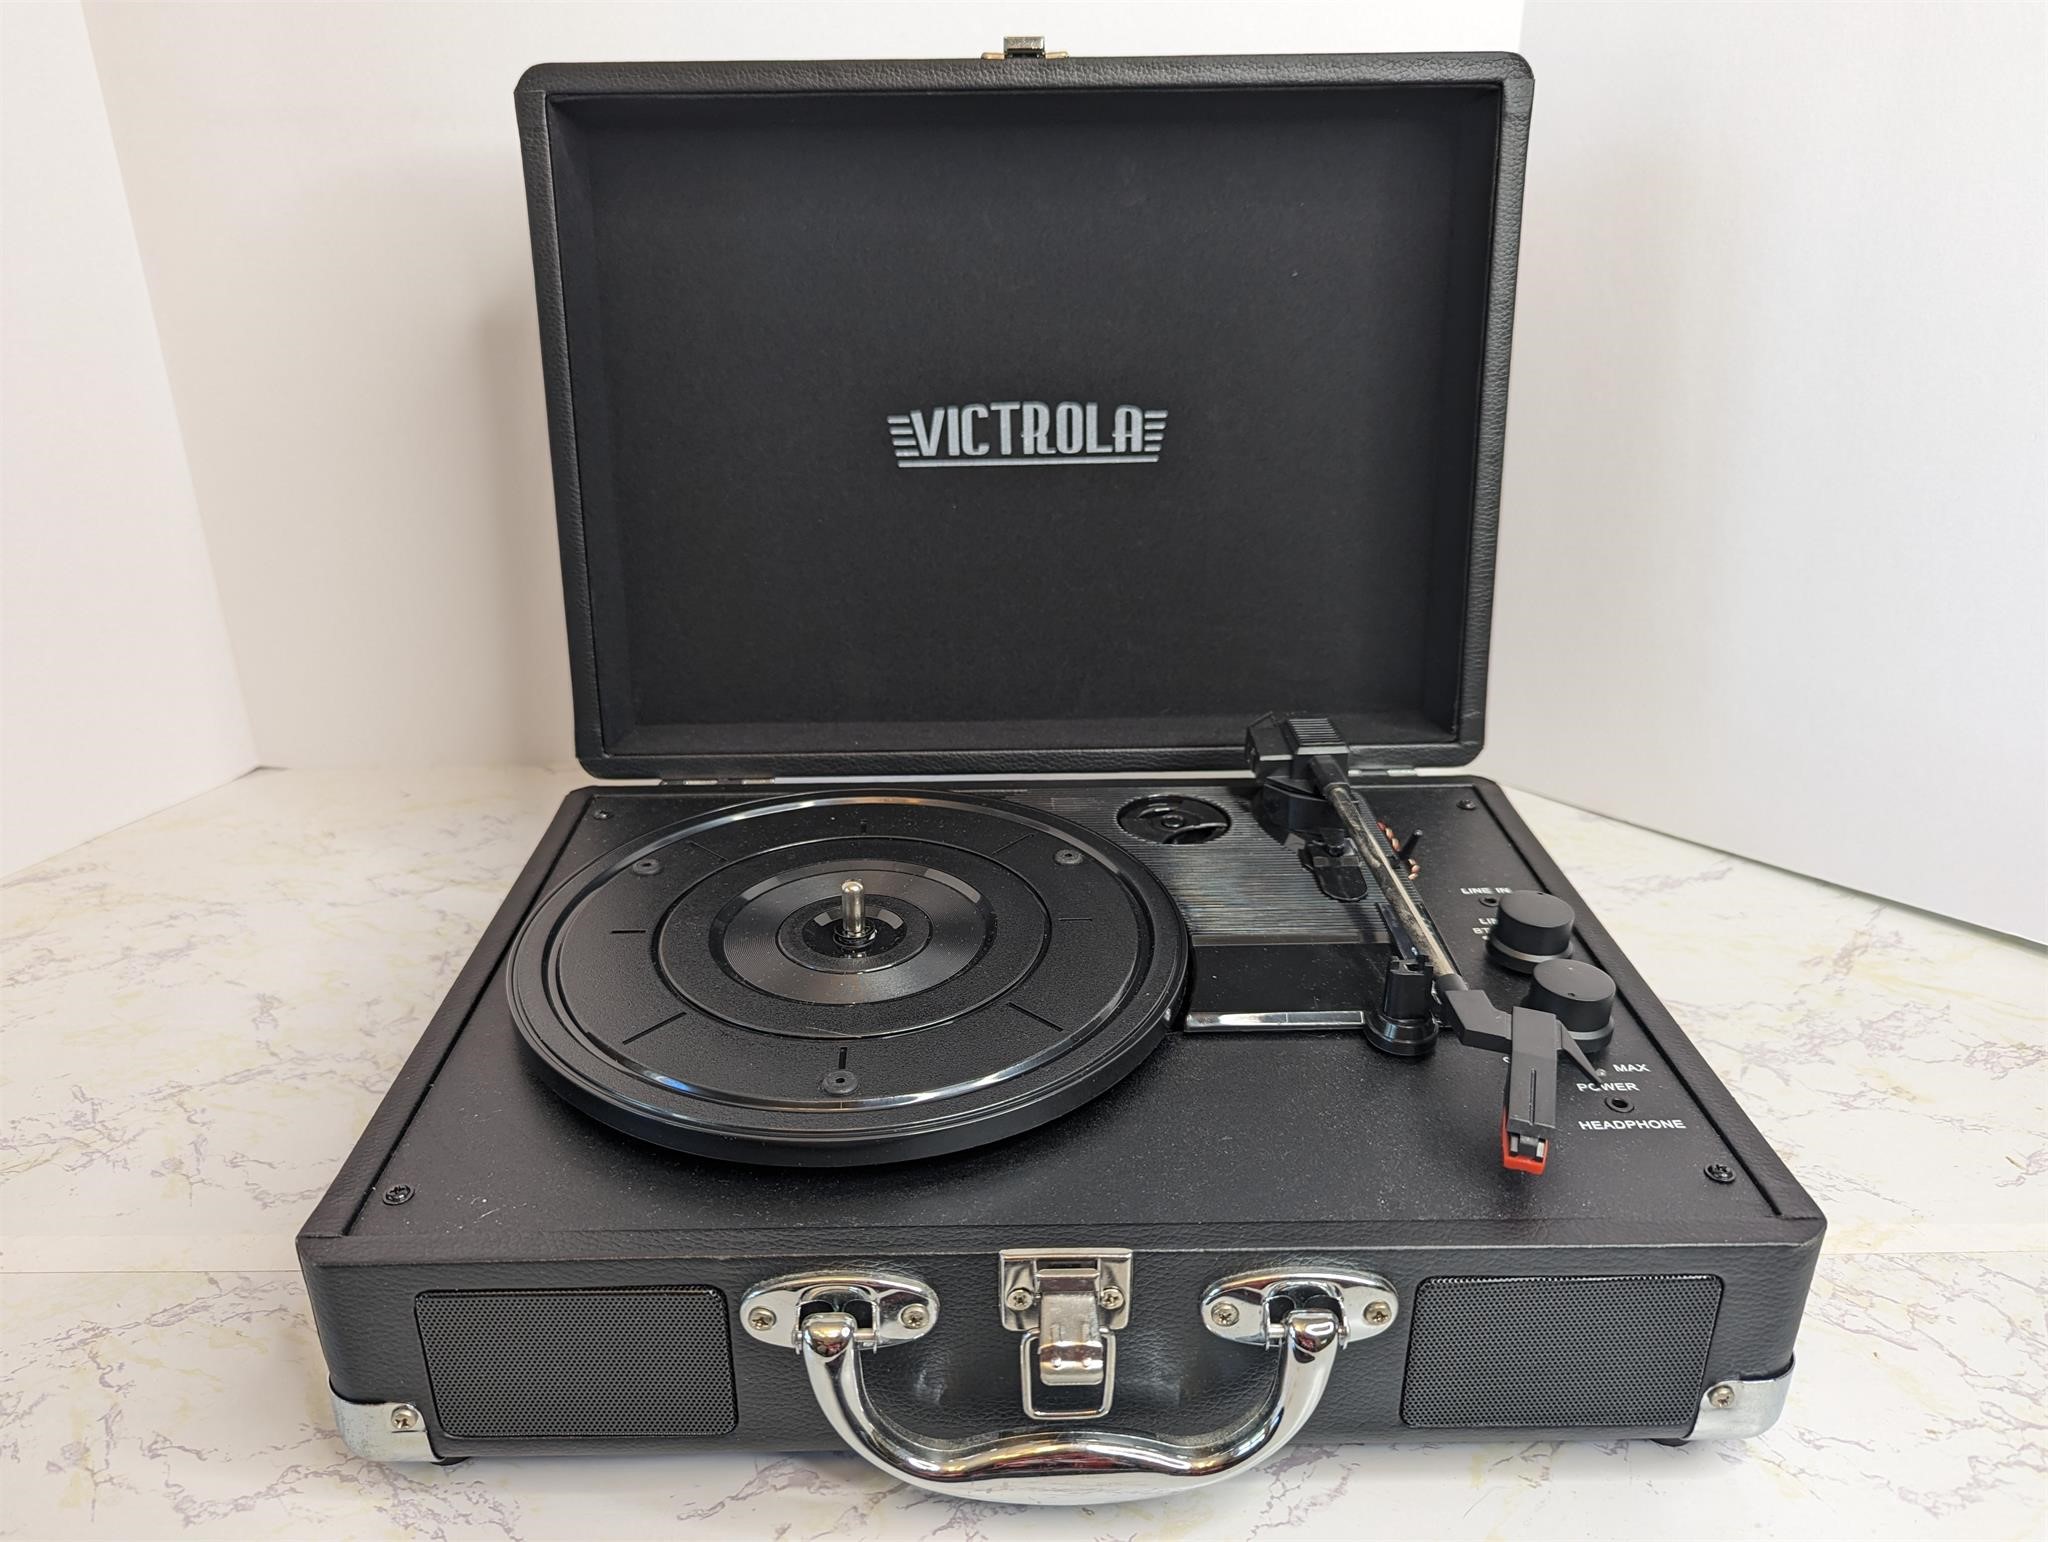 Victrola Vinyl player